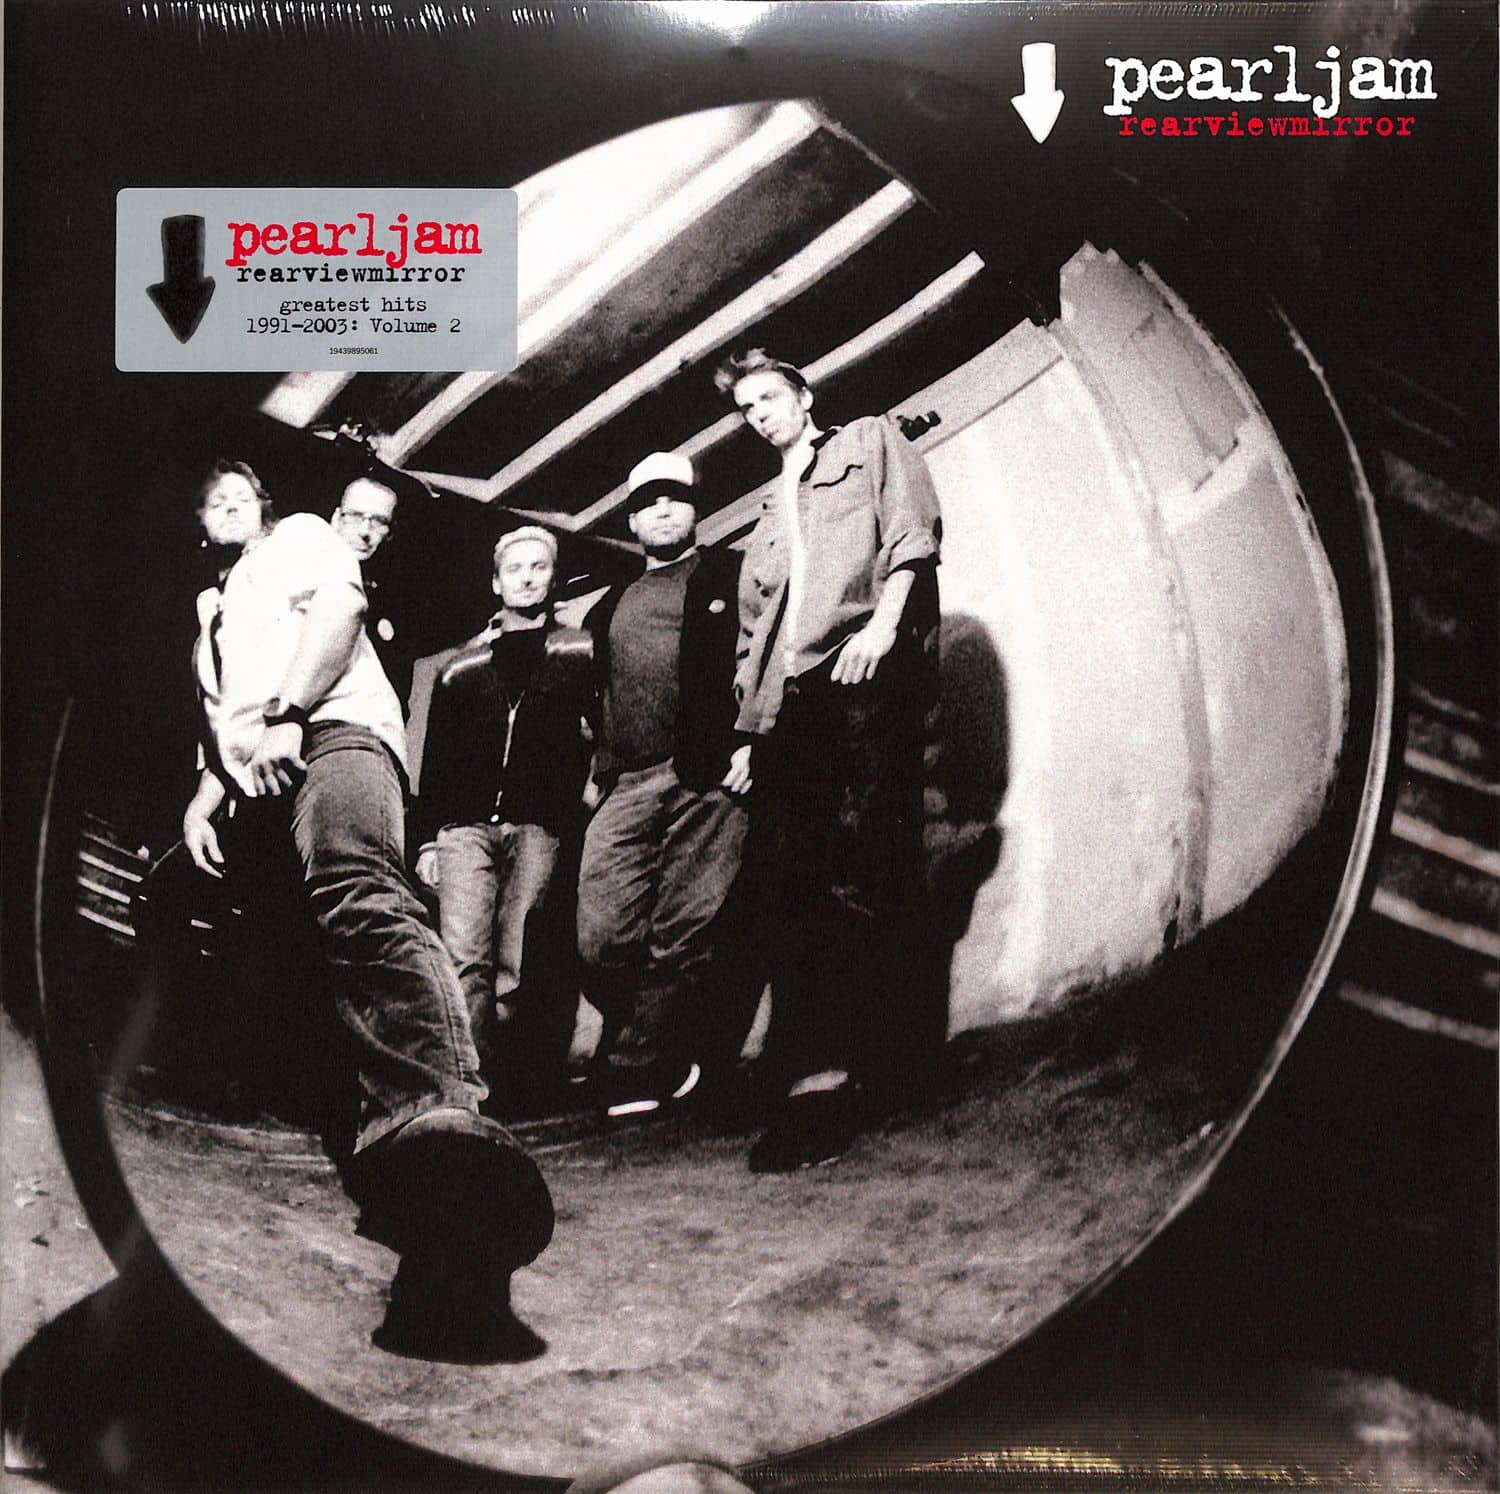 Pearl Jam - REARVIEWMIRROR - GREATEST HITS 1991-2003 VOL.2 